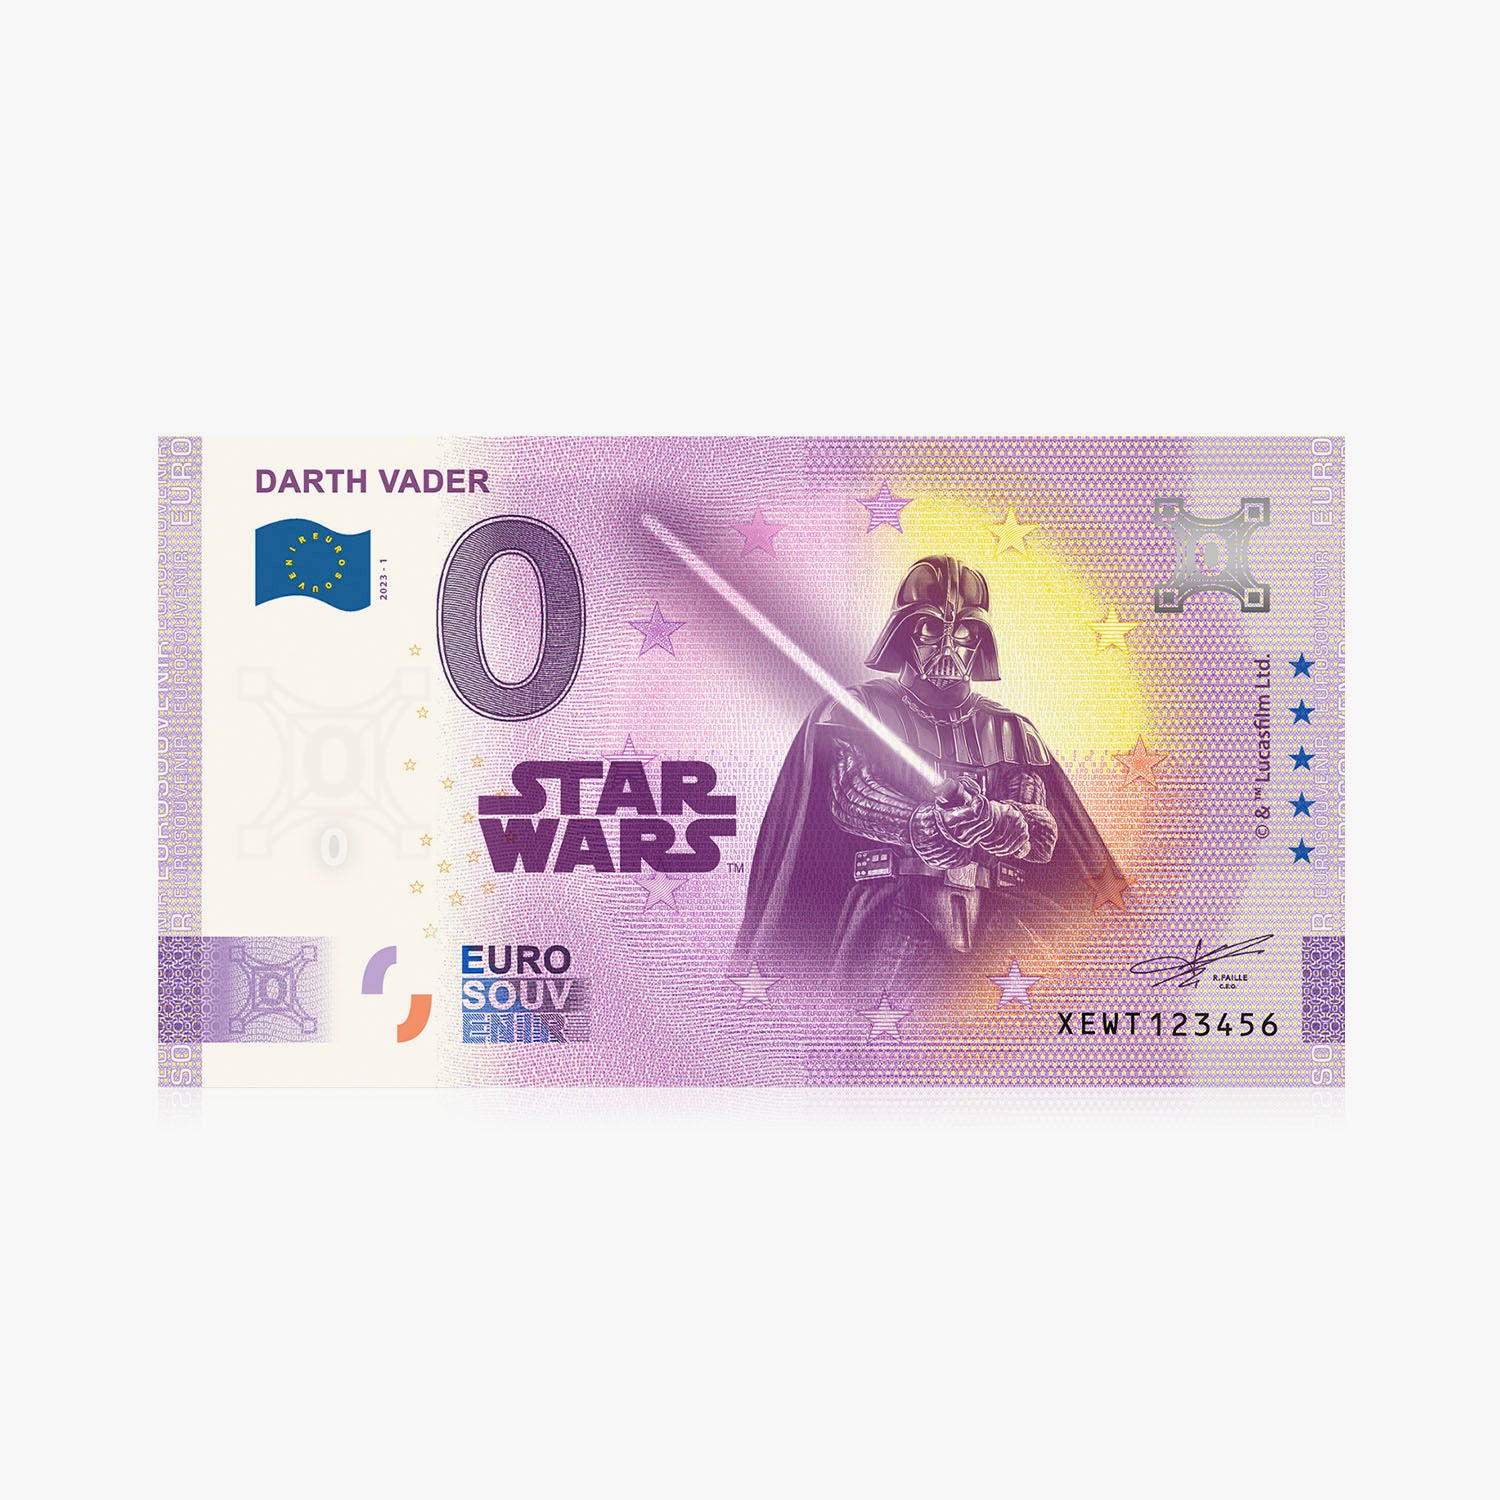 The Official Star Wars Darth Vader 0 Euro Banknote